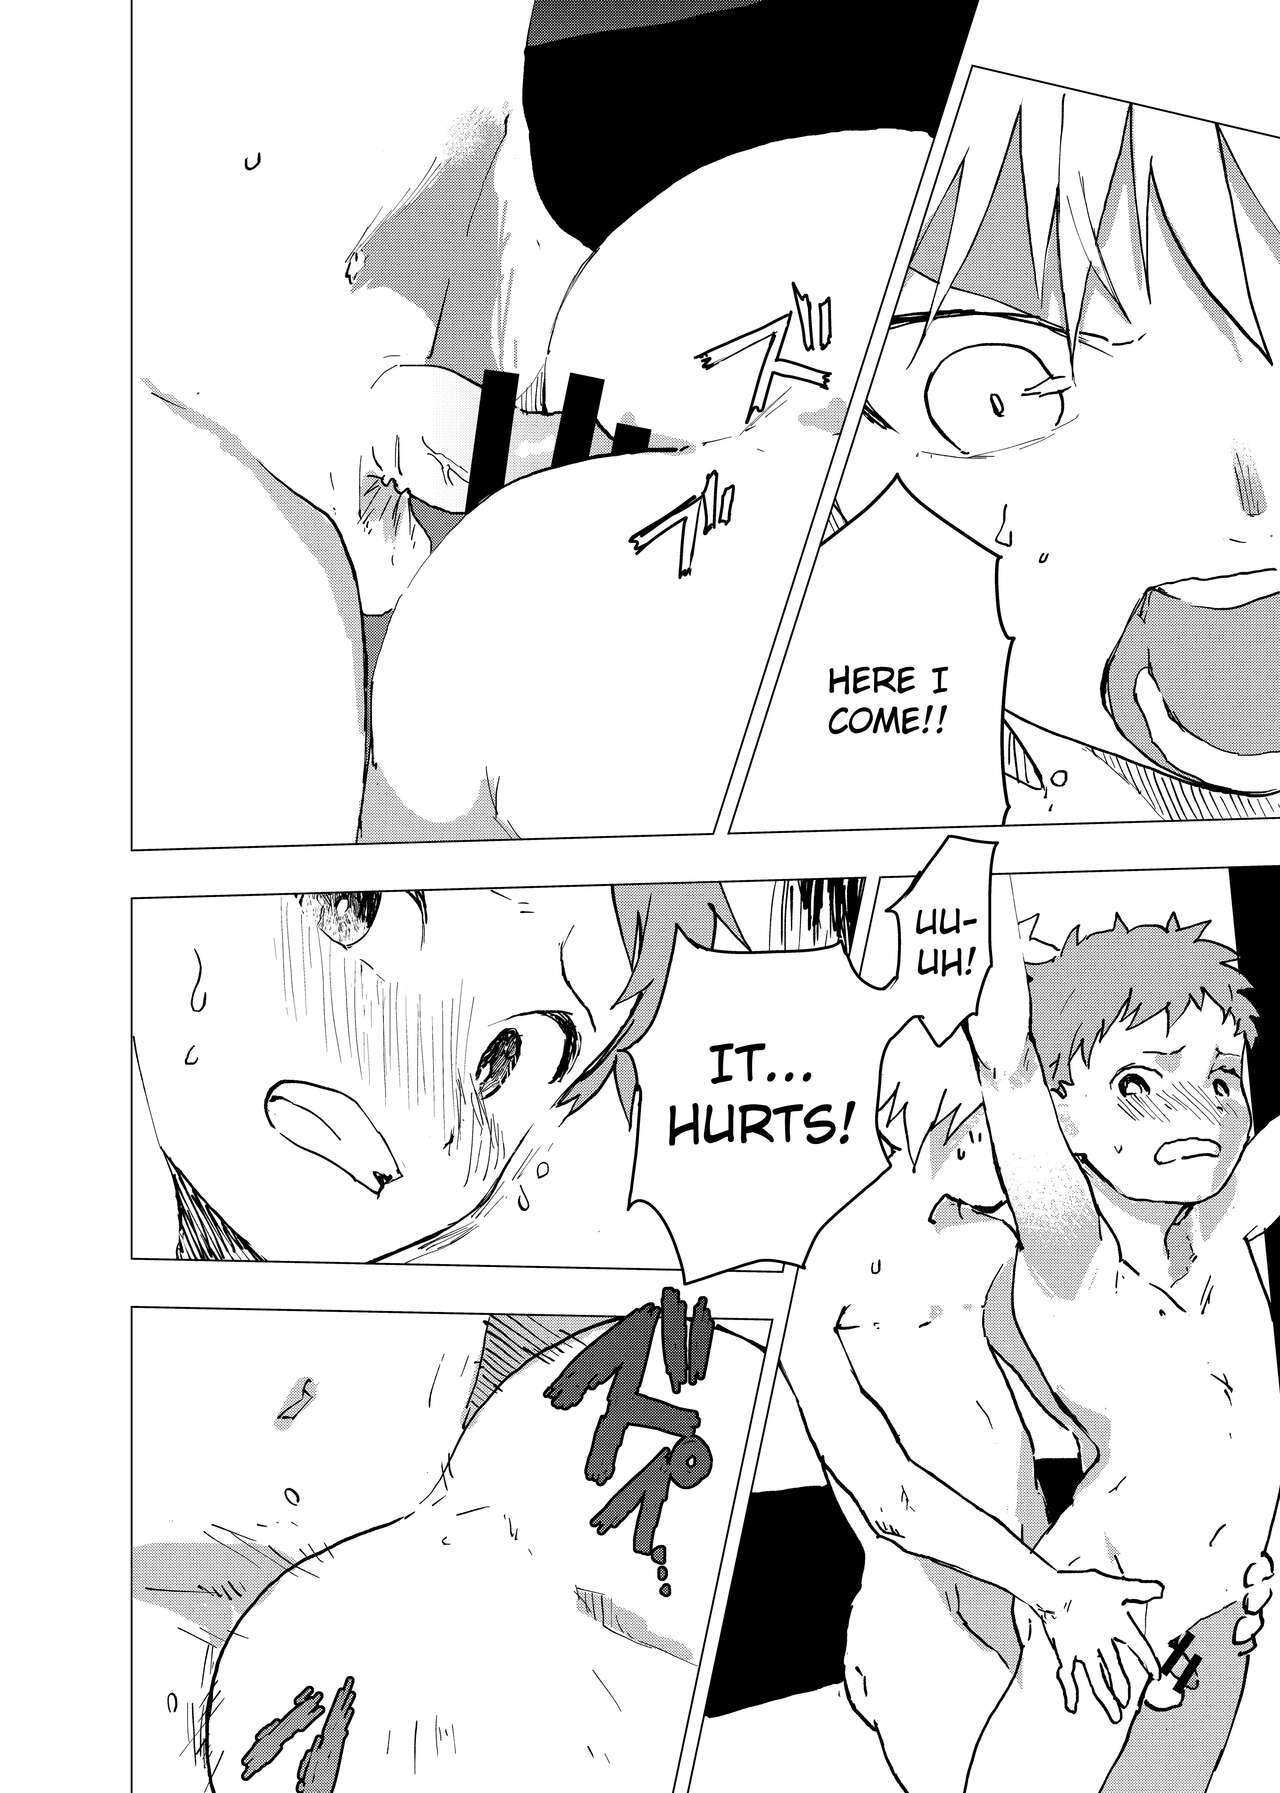 Ibasho ga Nai node Kamimachi shite mita Suterareta Shounen no Ero Manga Ch. 8 | A Dirty Manga About a Boy Who Got Abandoned and Is Waiting for Someone To Save Him Ch. 8 17